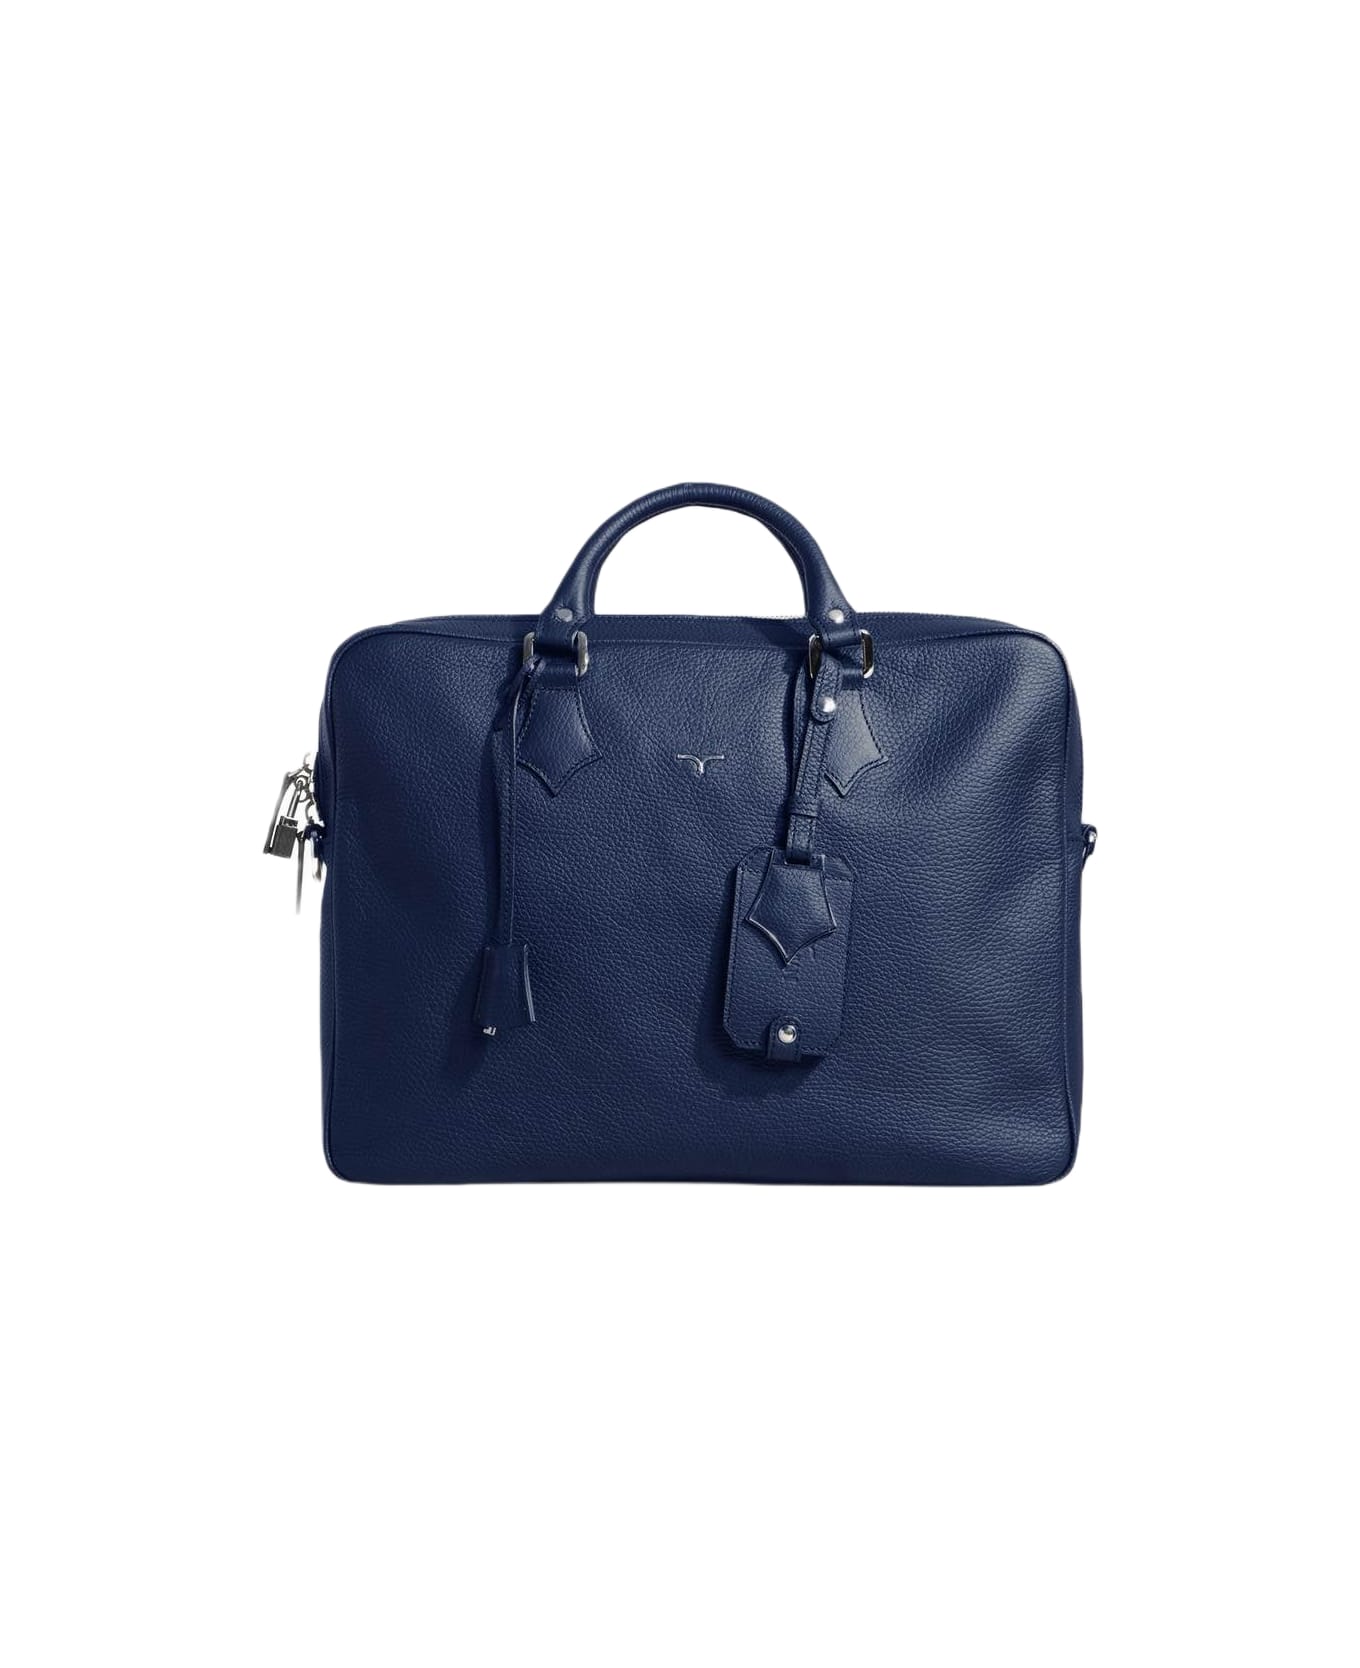 Larusmiani Briefcase 'piazza Affari' Luggage - Blue